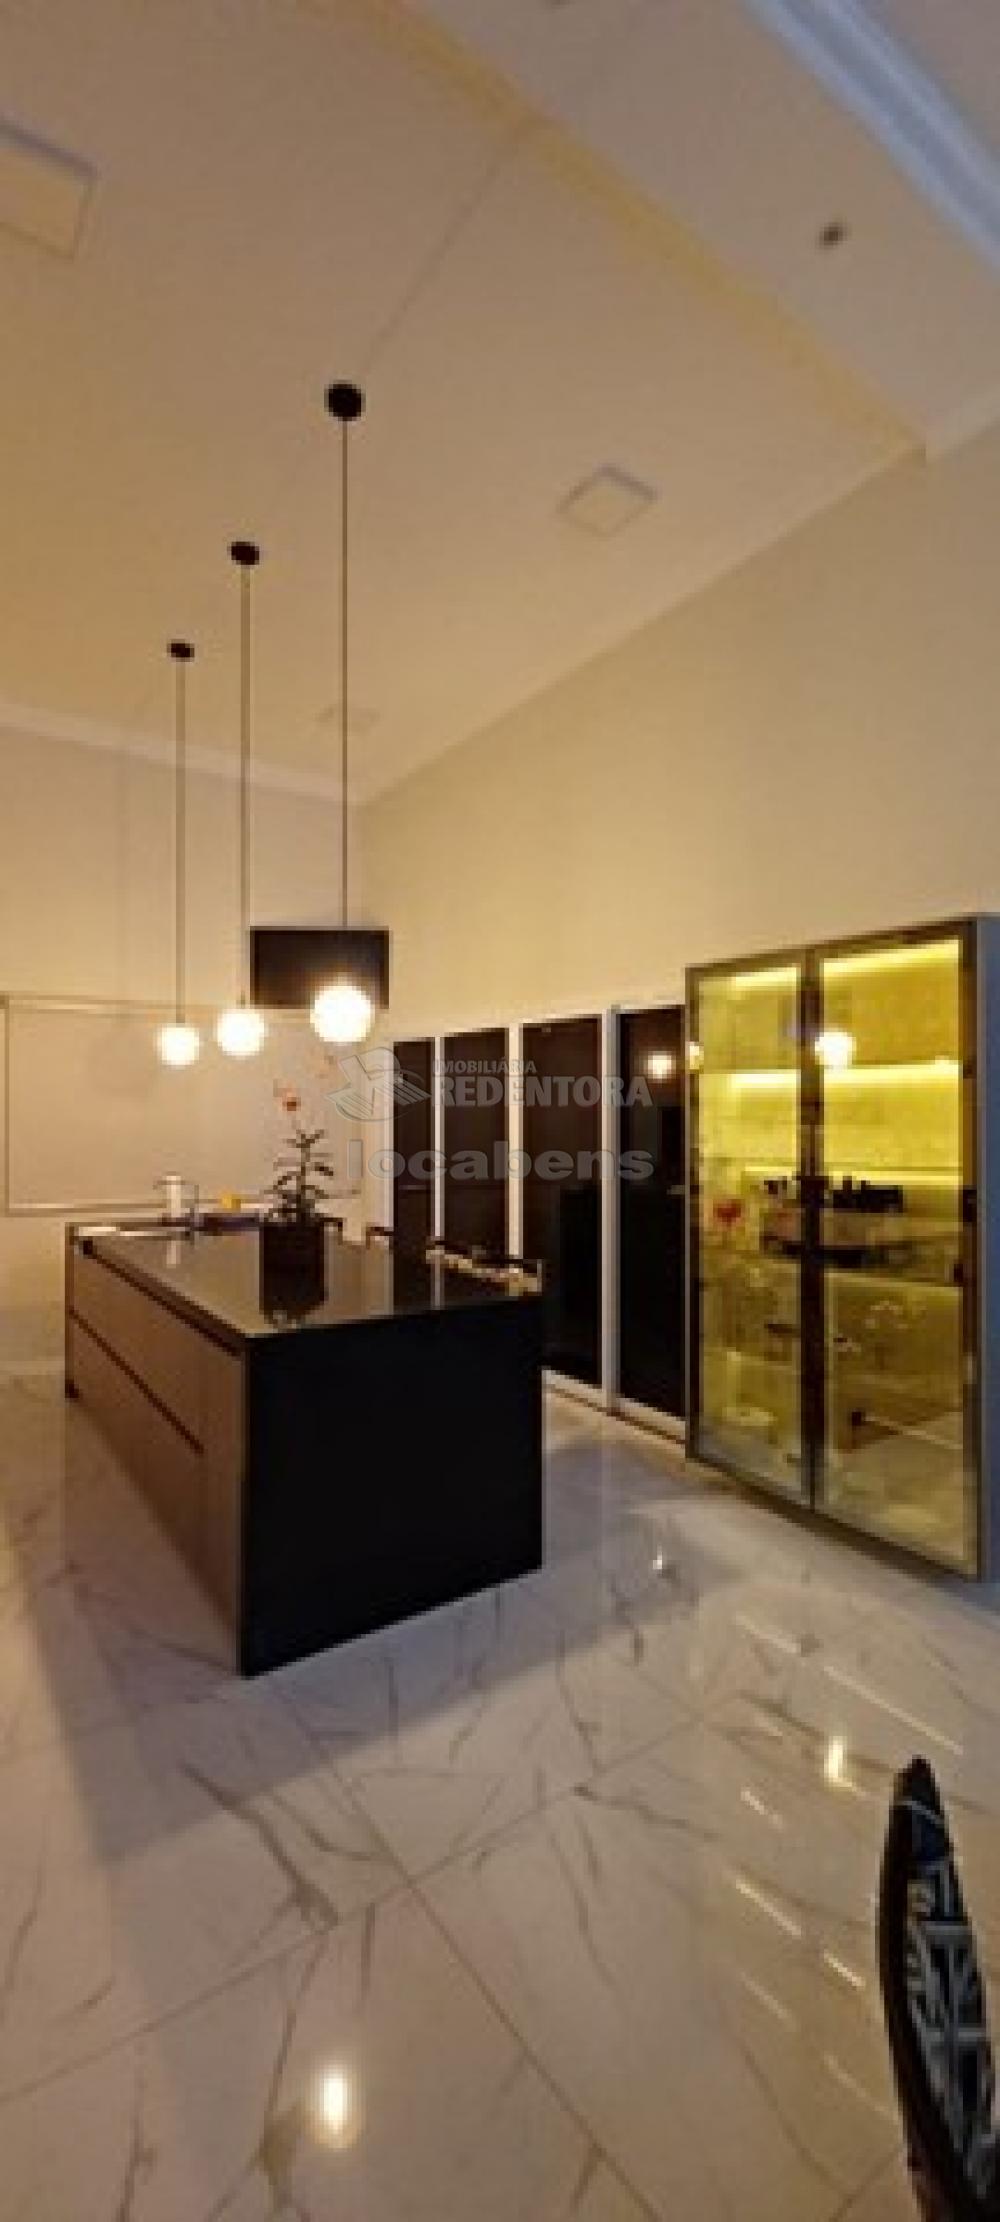 Comprar Casa / Condomínio em Mirassol R$ 900.000,00 - Foto 5